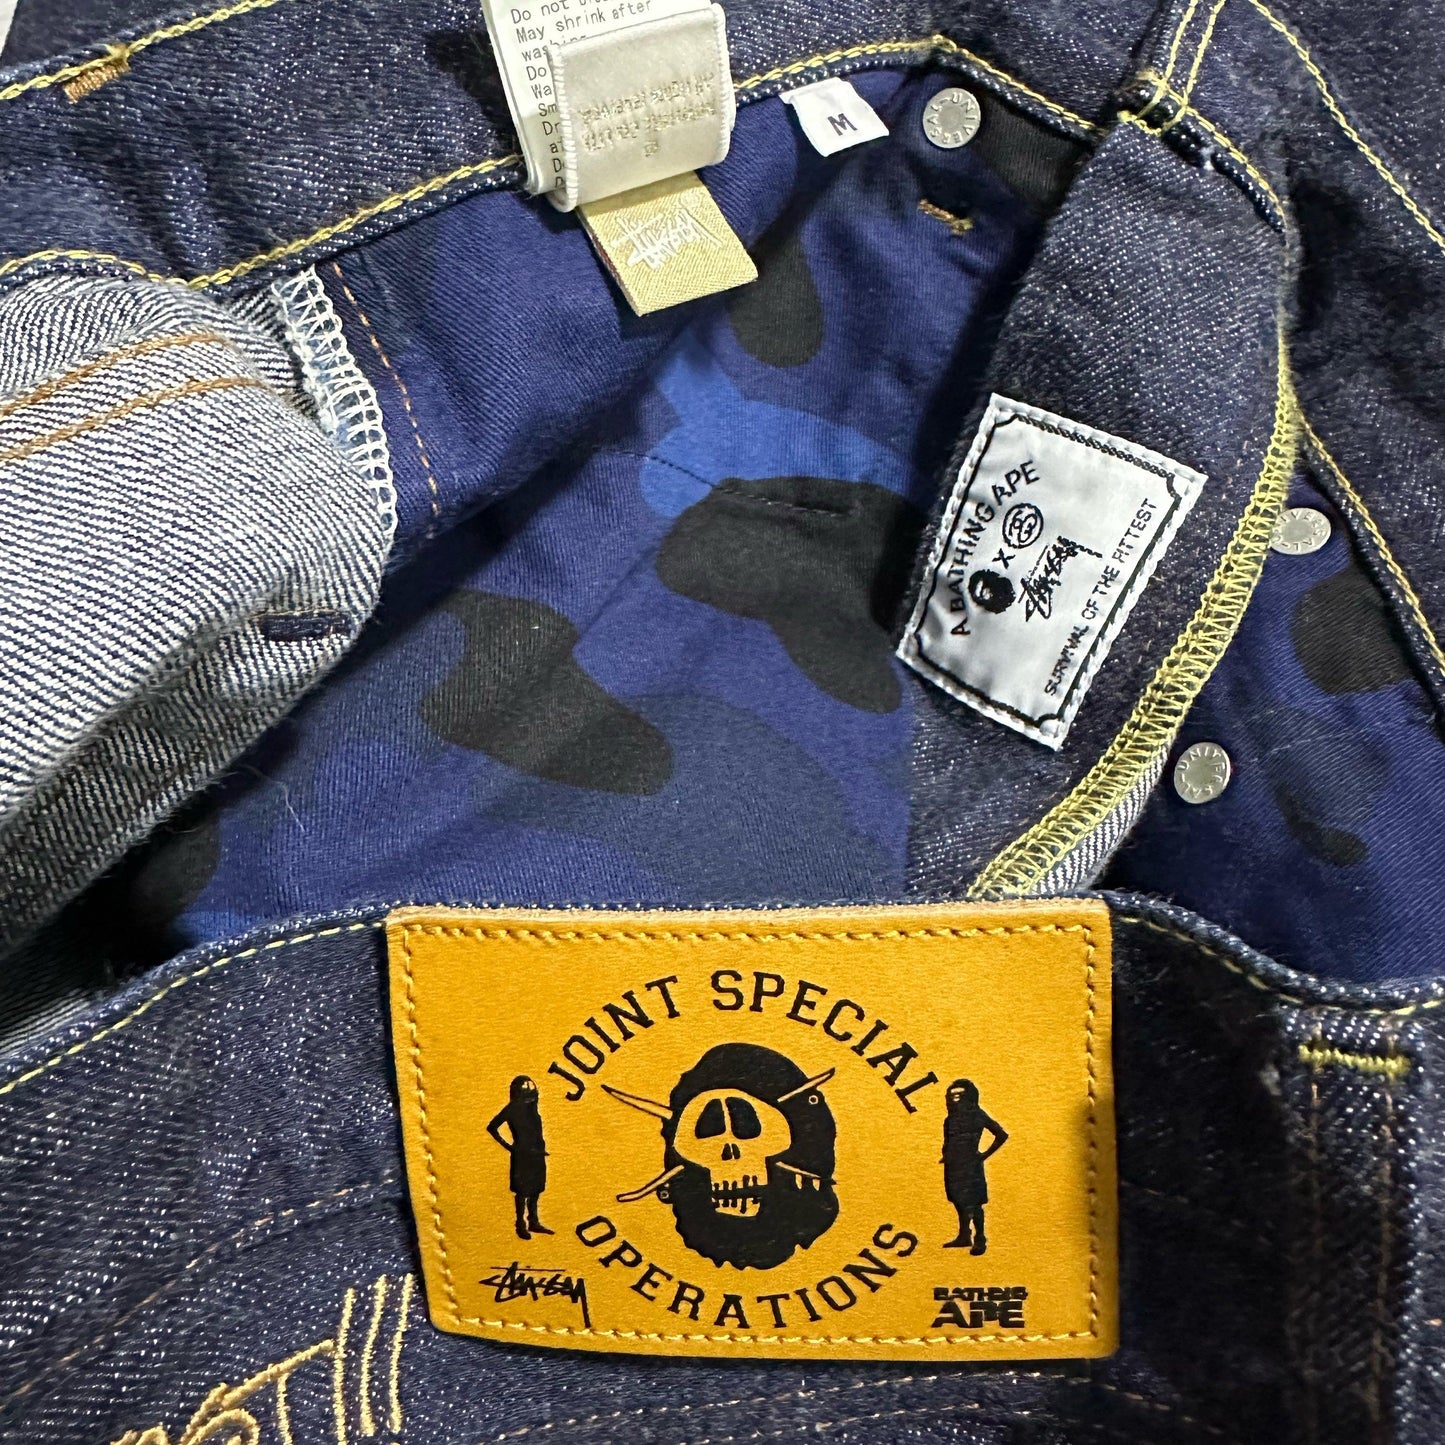 Stussy x Bape Contrast Stitching Logo Denim Jeans - Known Source